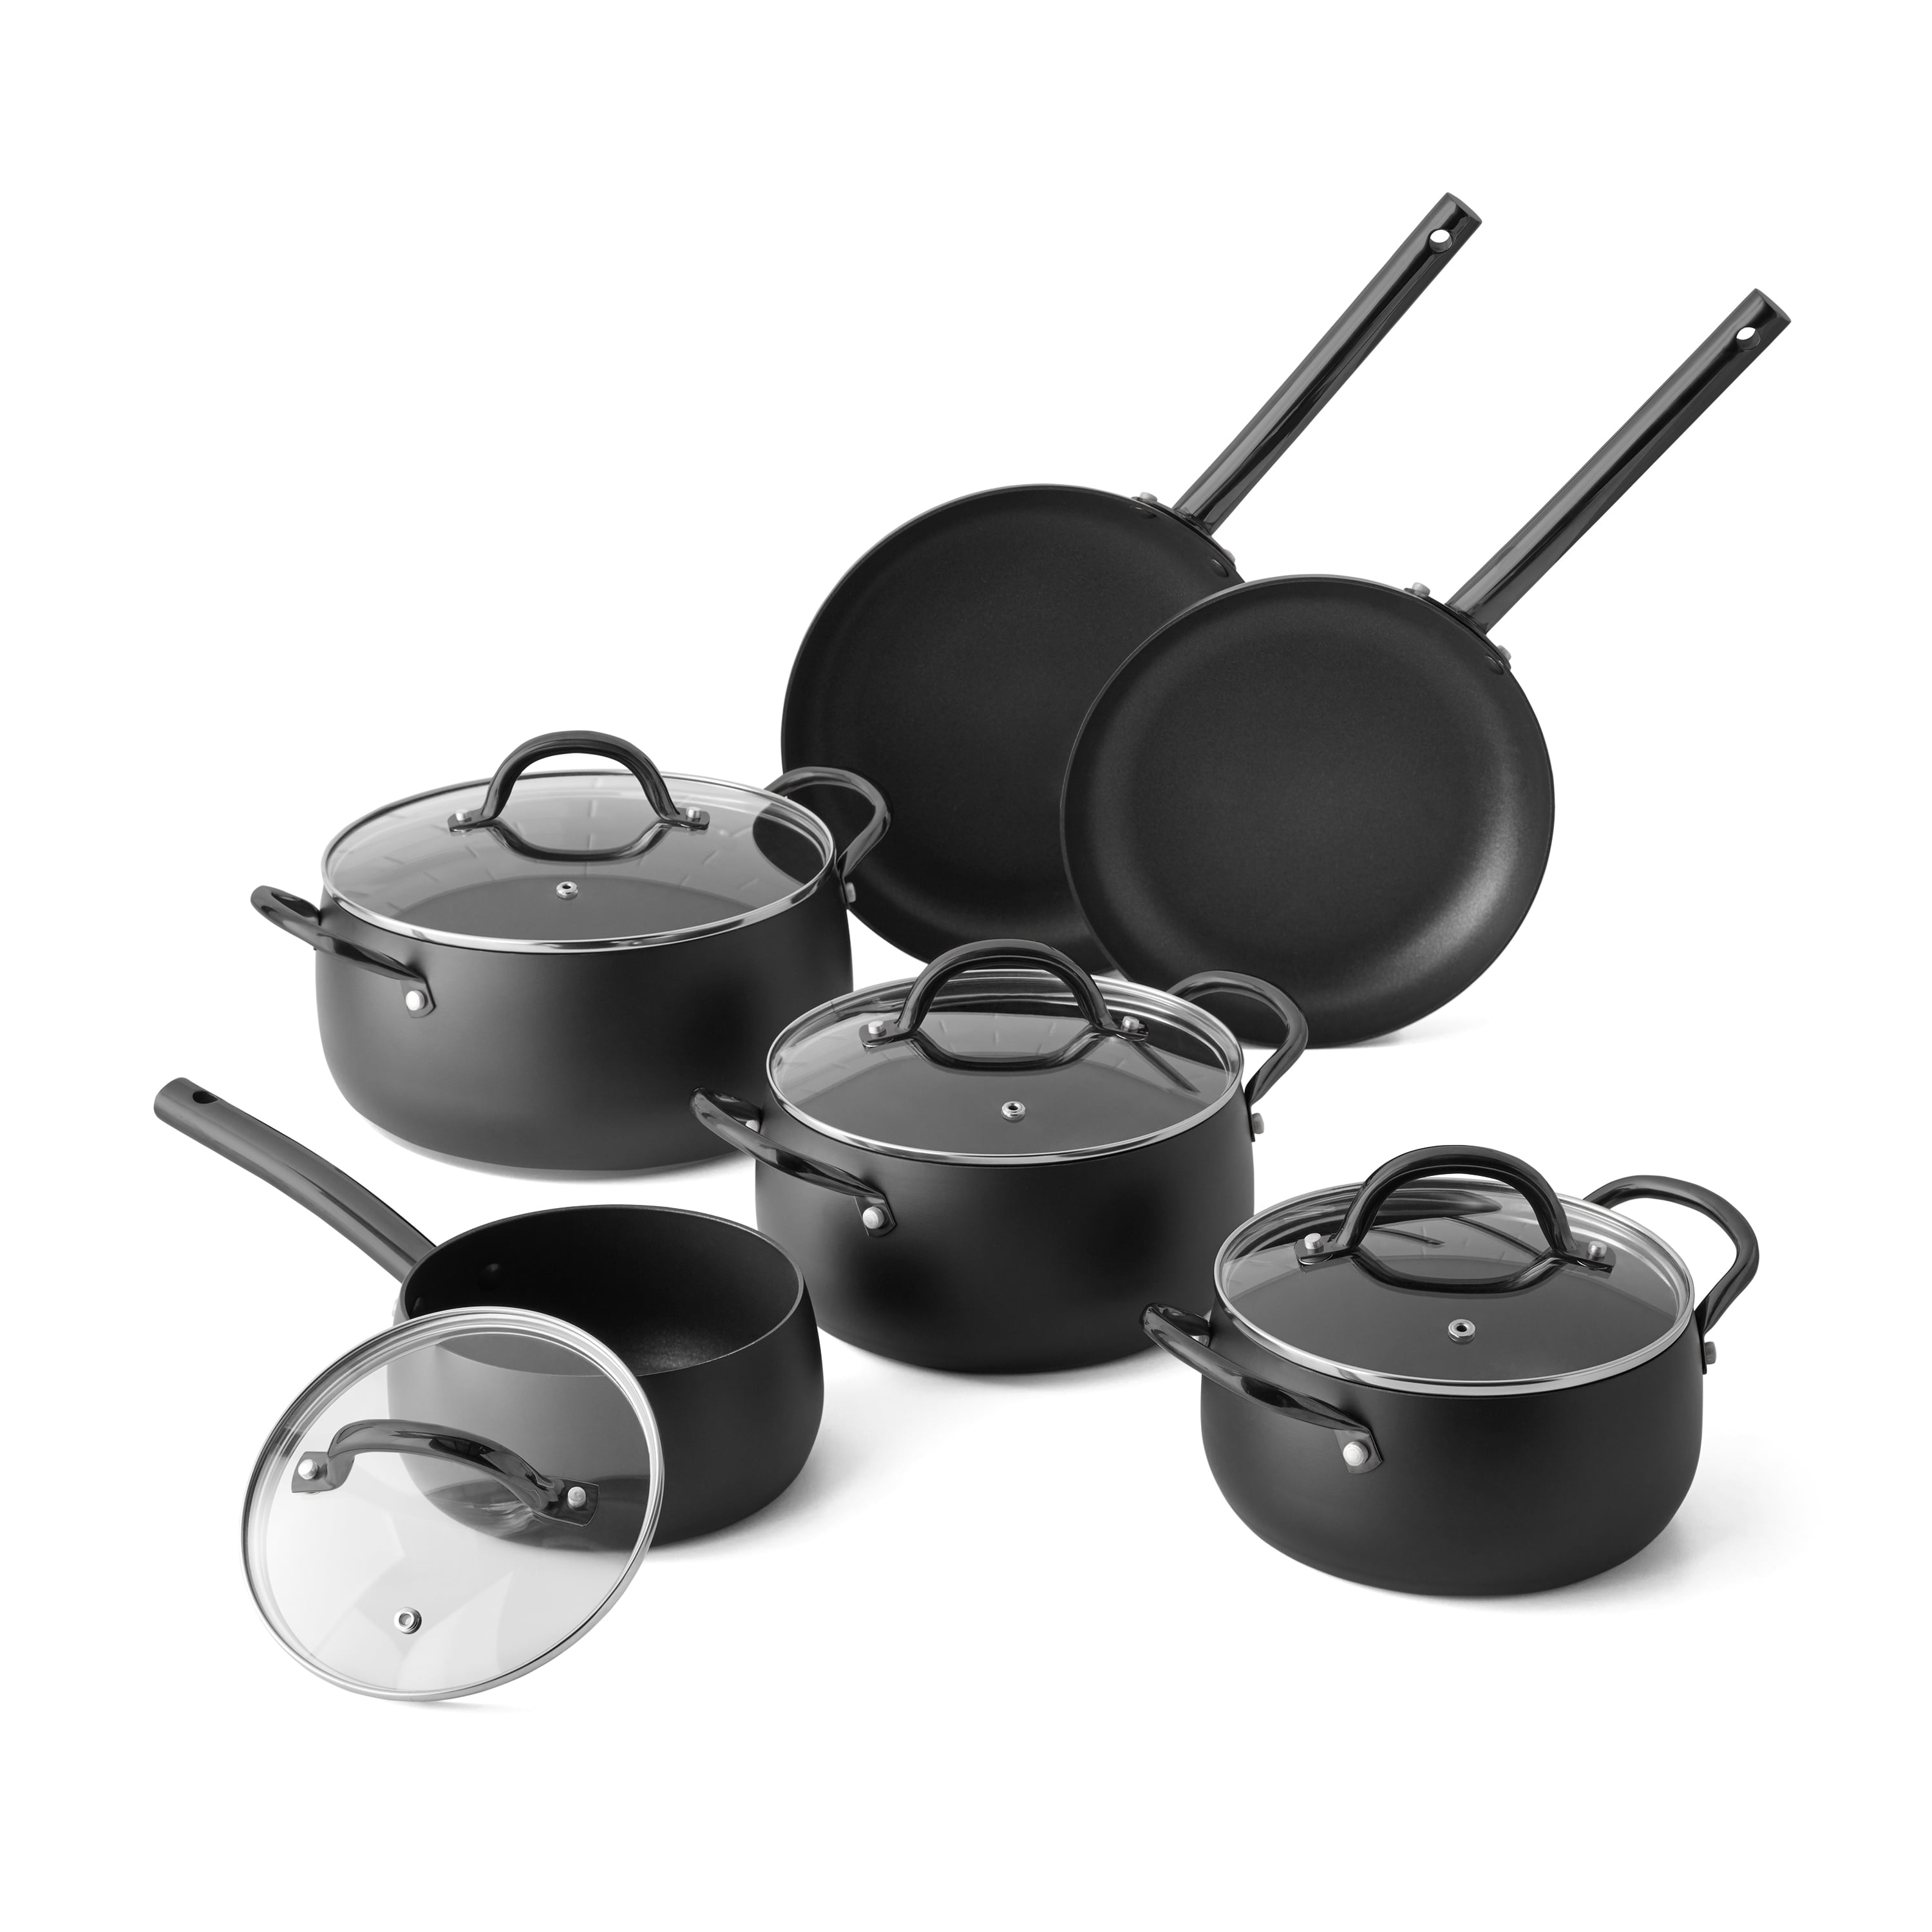 Mainstays 7 Piece Nonstick Cookware Set, Black – WellBeing Marts